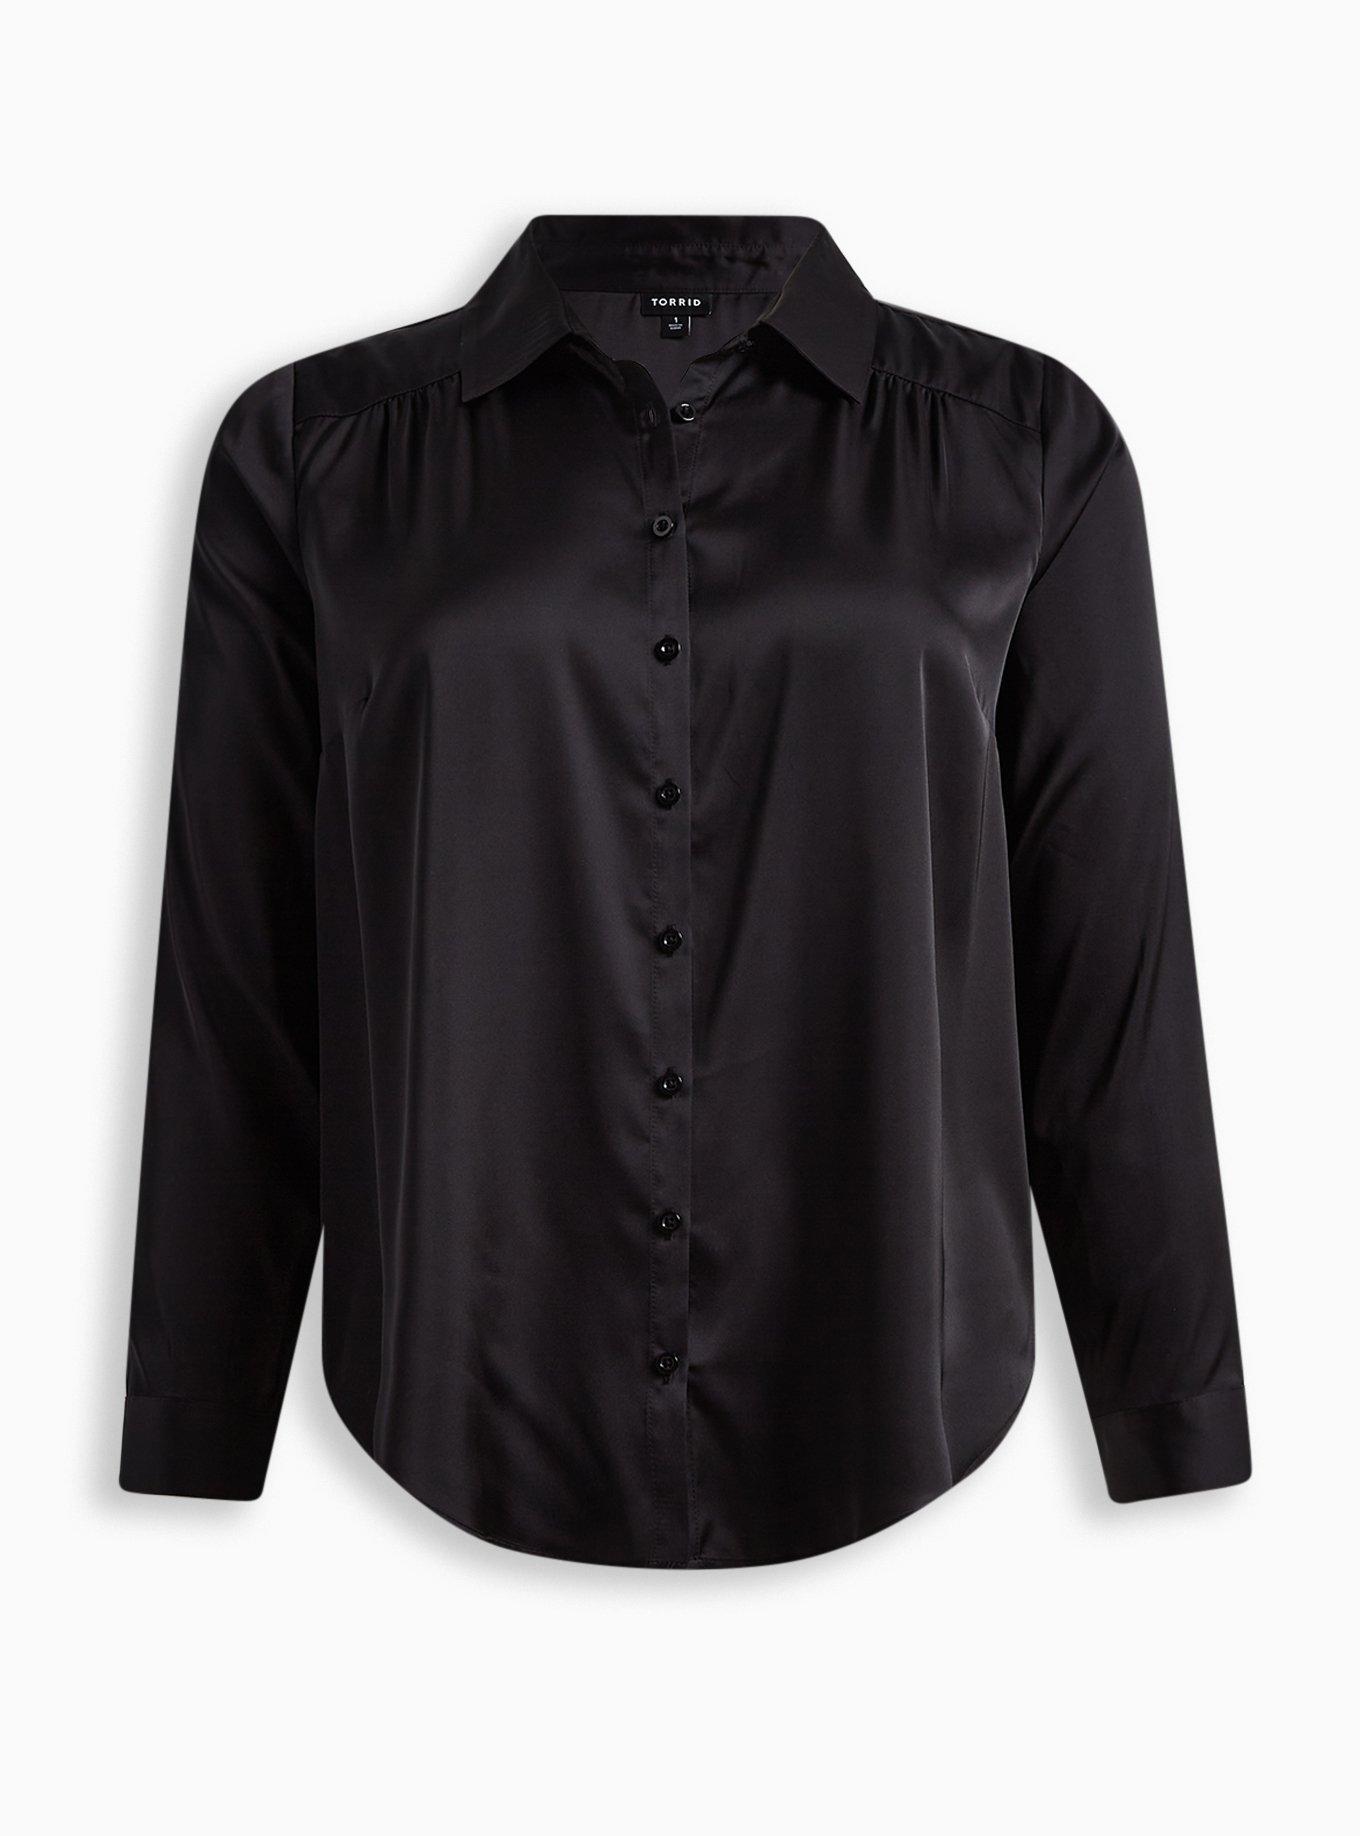 Plus Size - Madison Satin Button Up Long Sleeve Shirt - Torrid